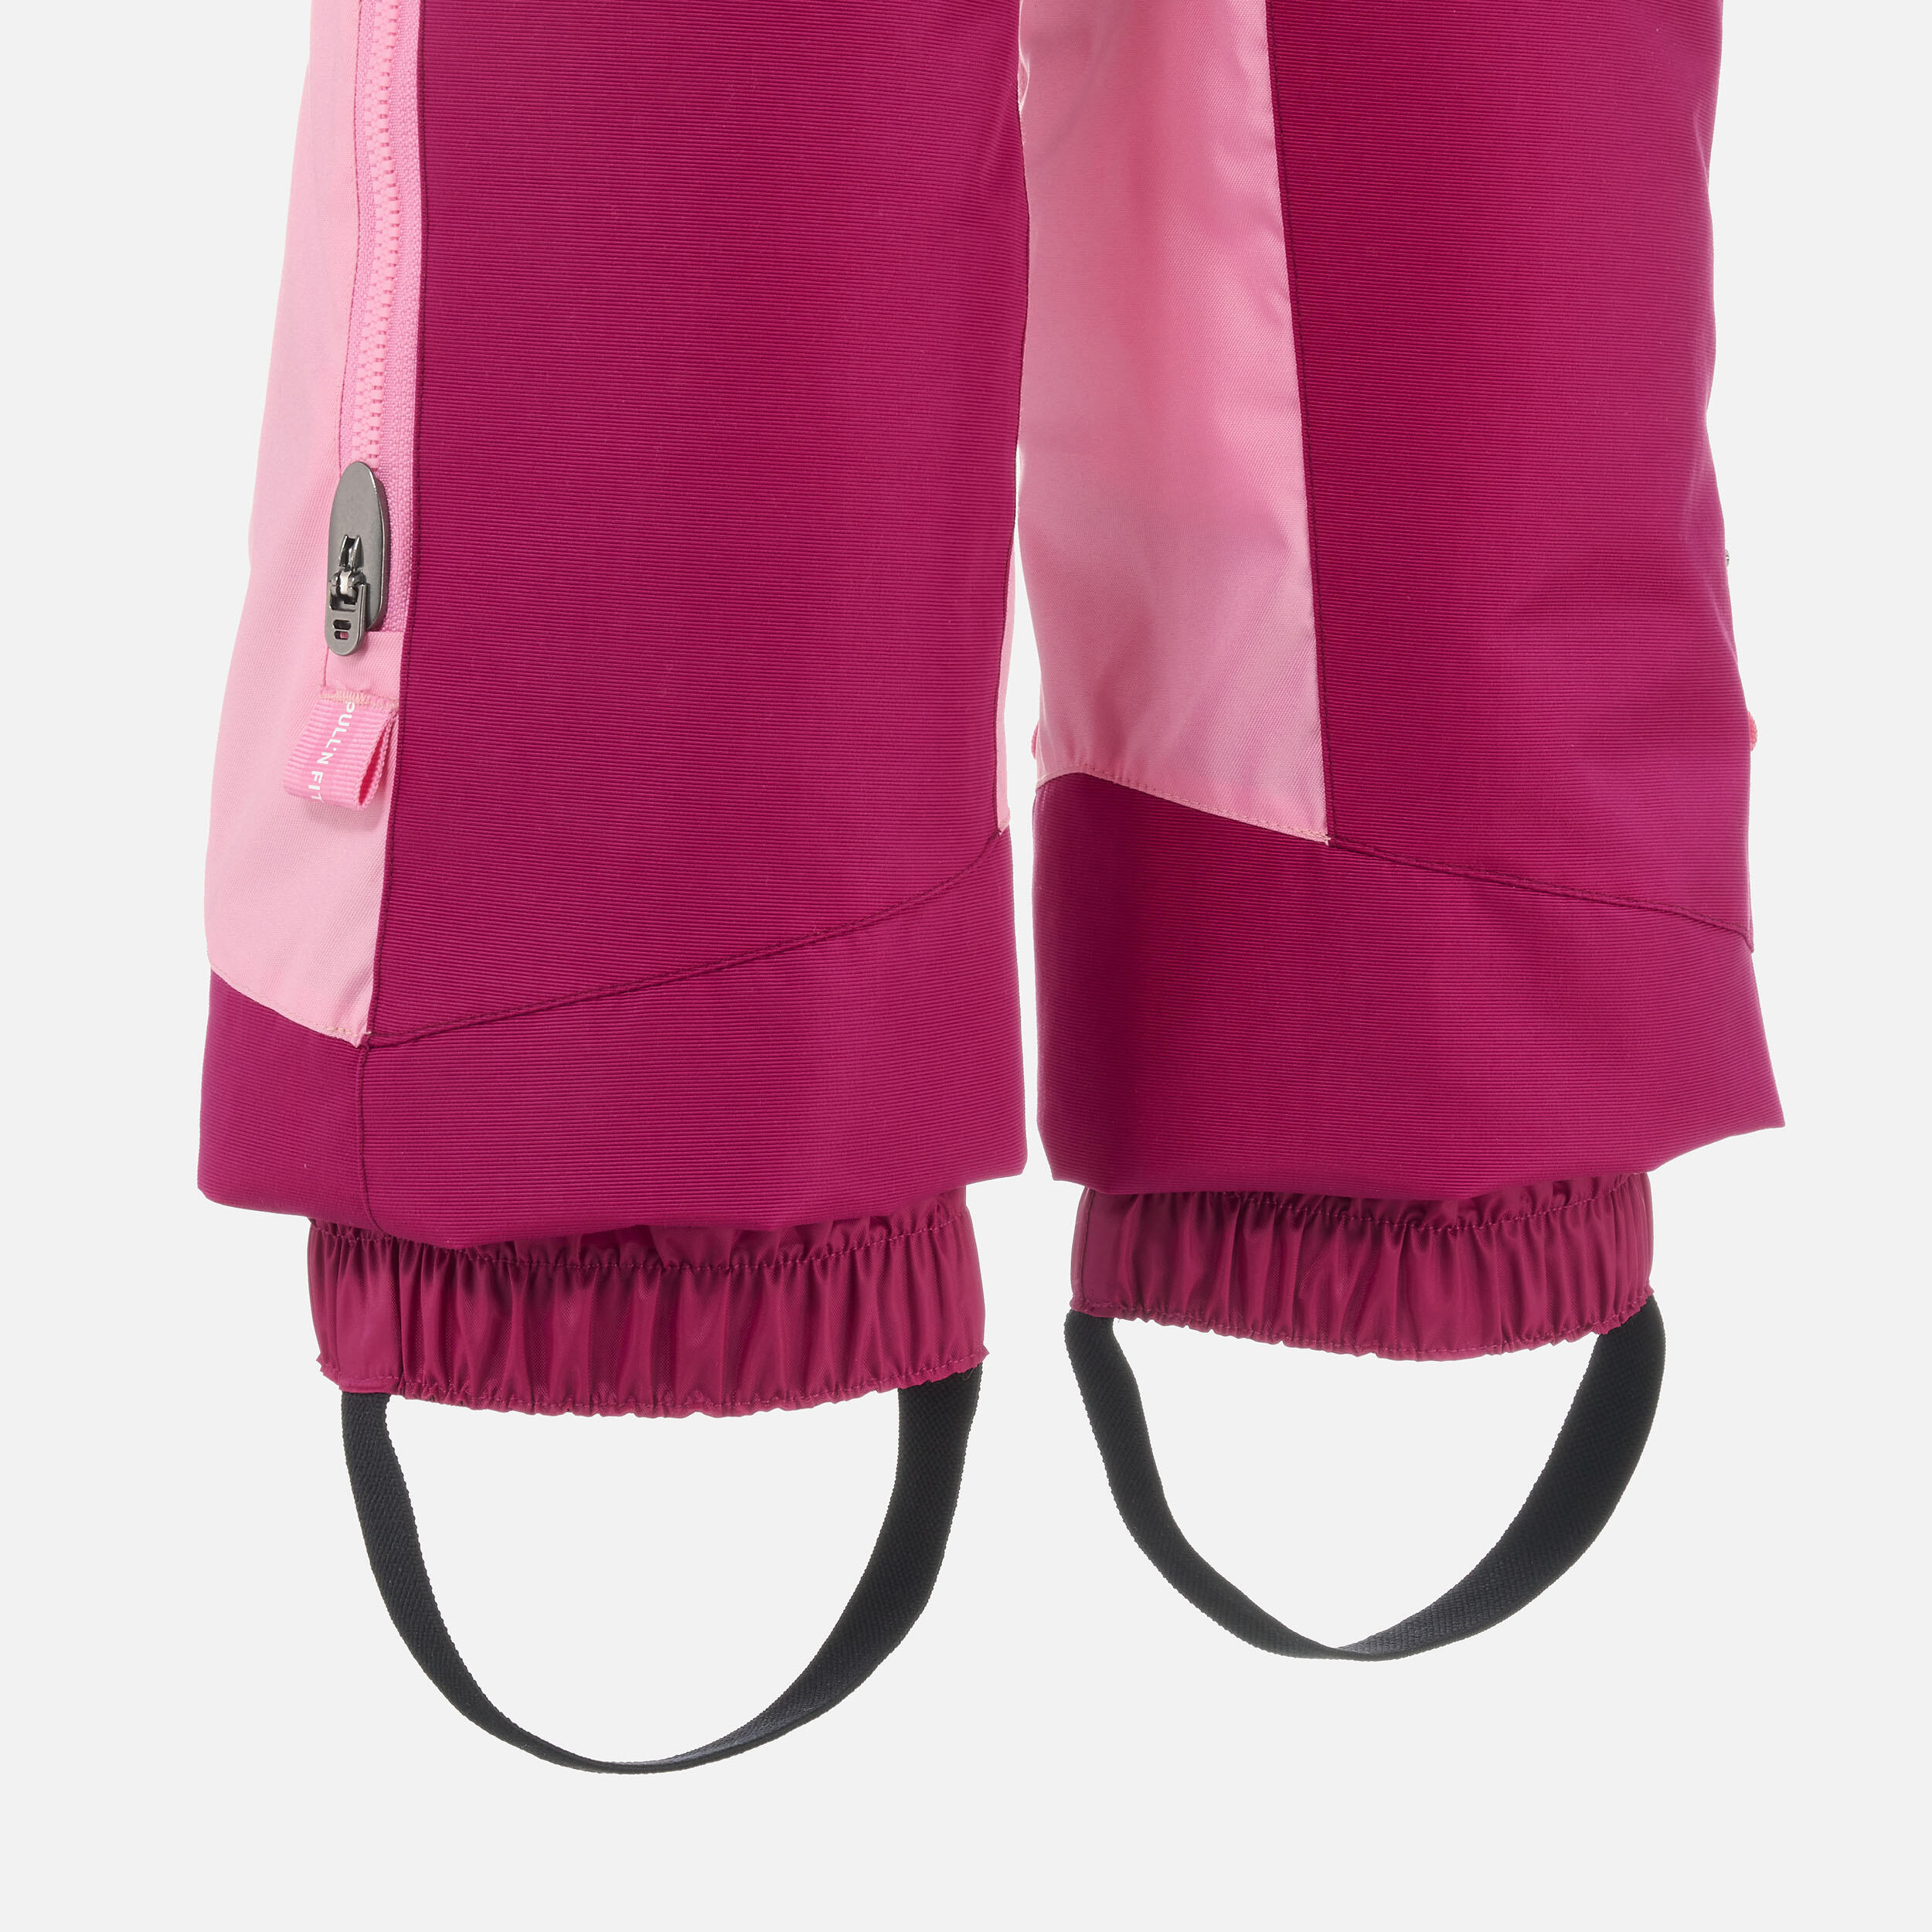 Kids’ Warm and Waterproof Ski Suit 580 - Pink 14/15